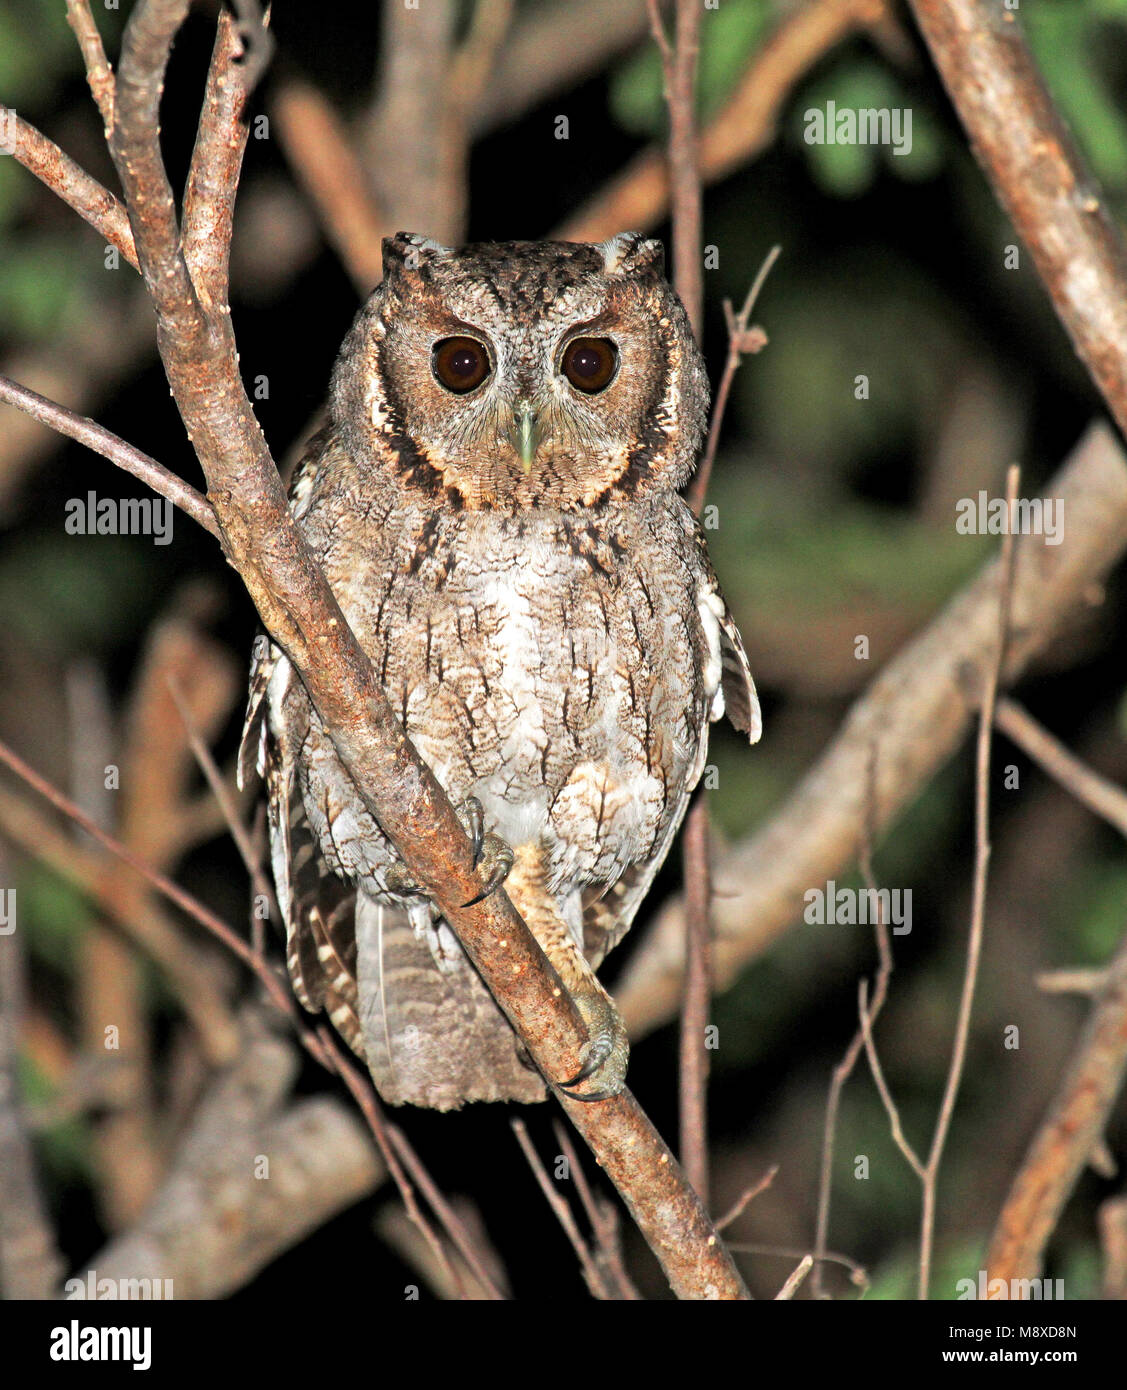 Nachtelijke Balsasschreeuwuil; Balsas Screech-Owl (Megascops seductus) active during the night Stock Photo